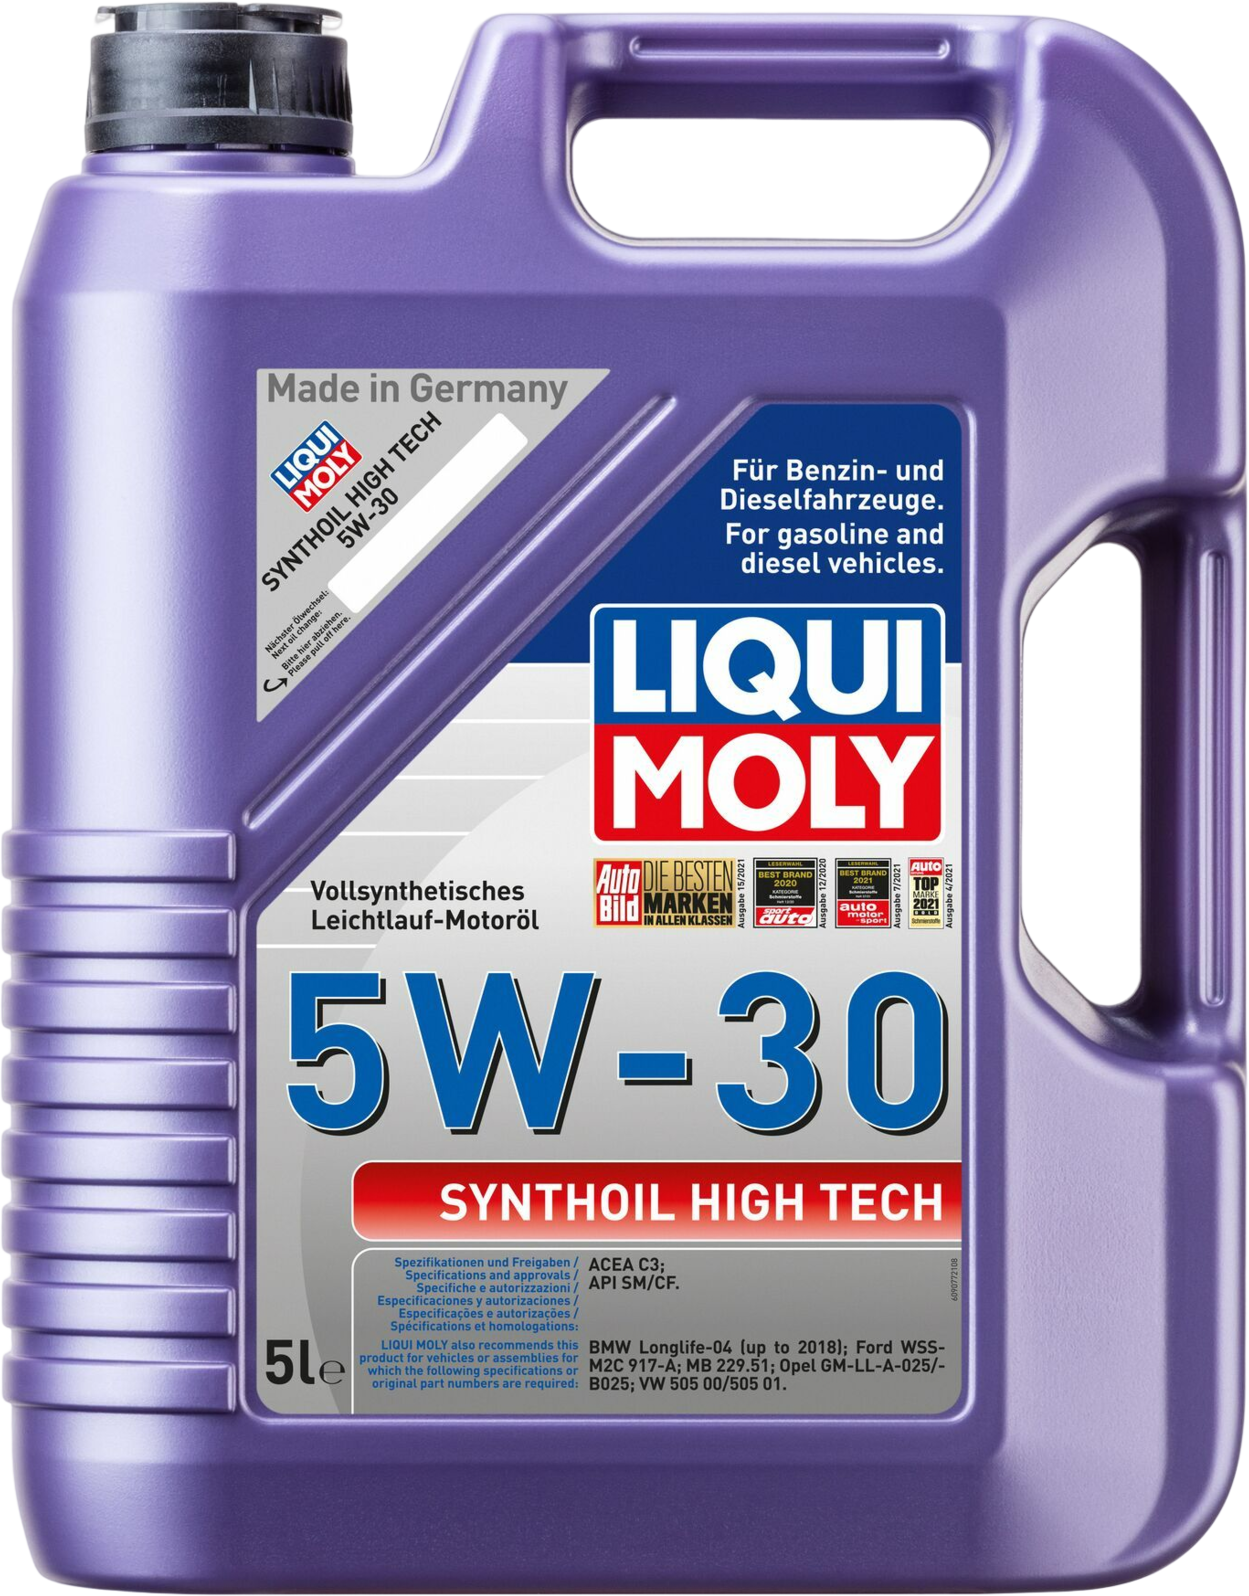 Liqui Moly Synthoil High Tech 5W-30, 5 lt